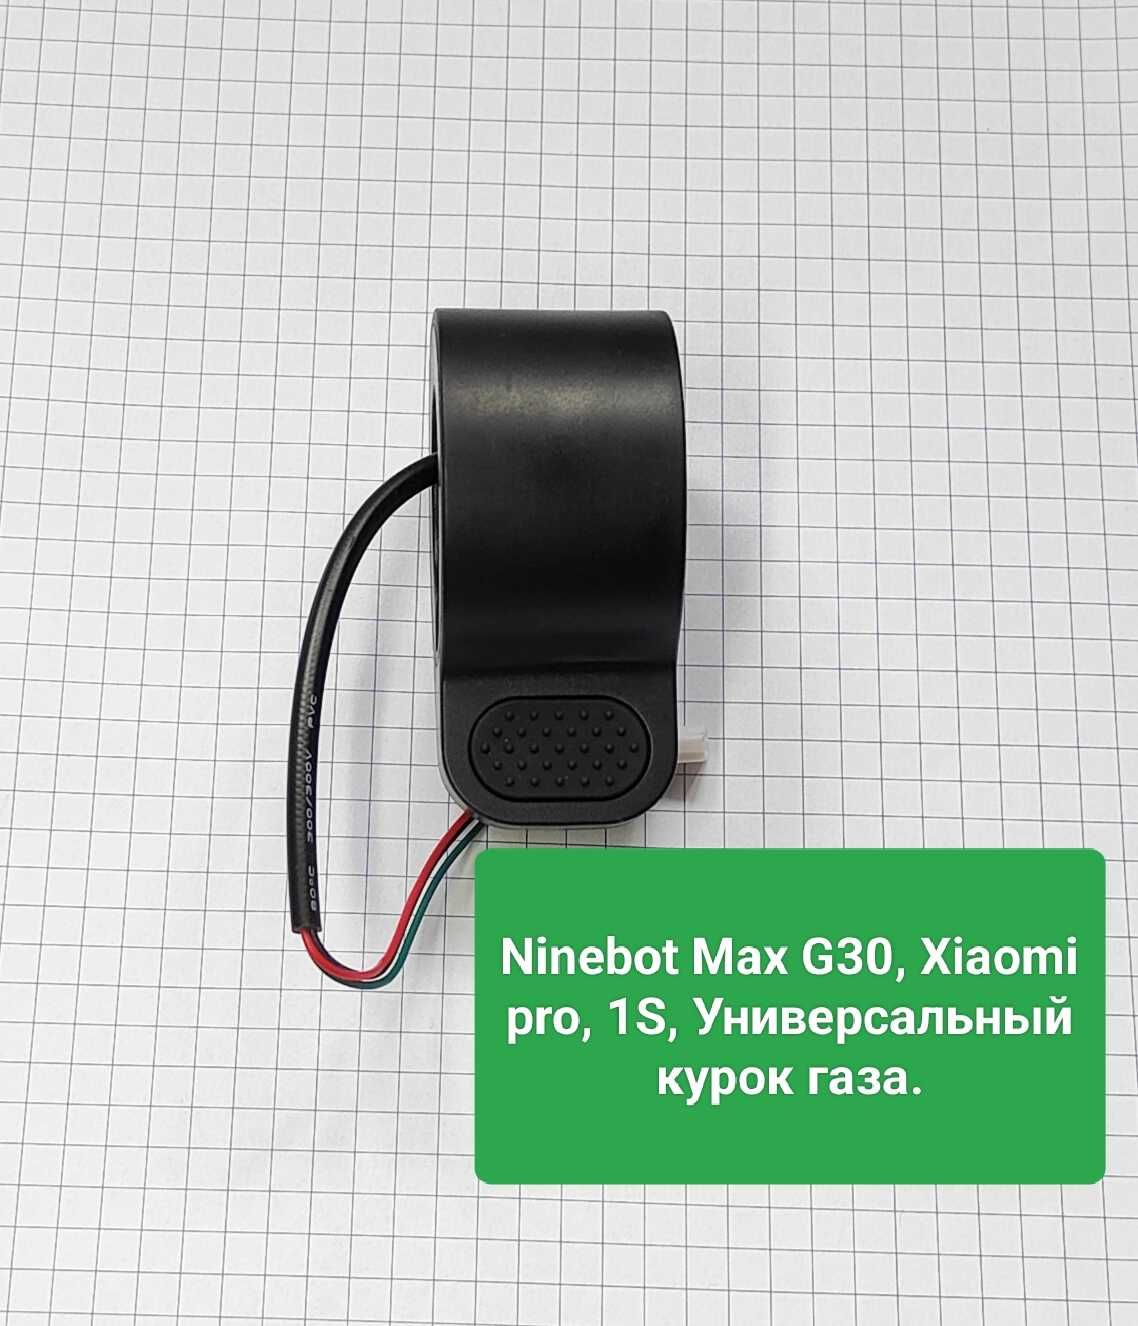 Ninebot Max G30, Xiaomi pro, 1s, ручка газа, акселератор, курок.3 pin